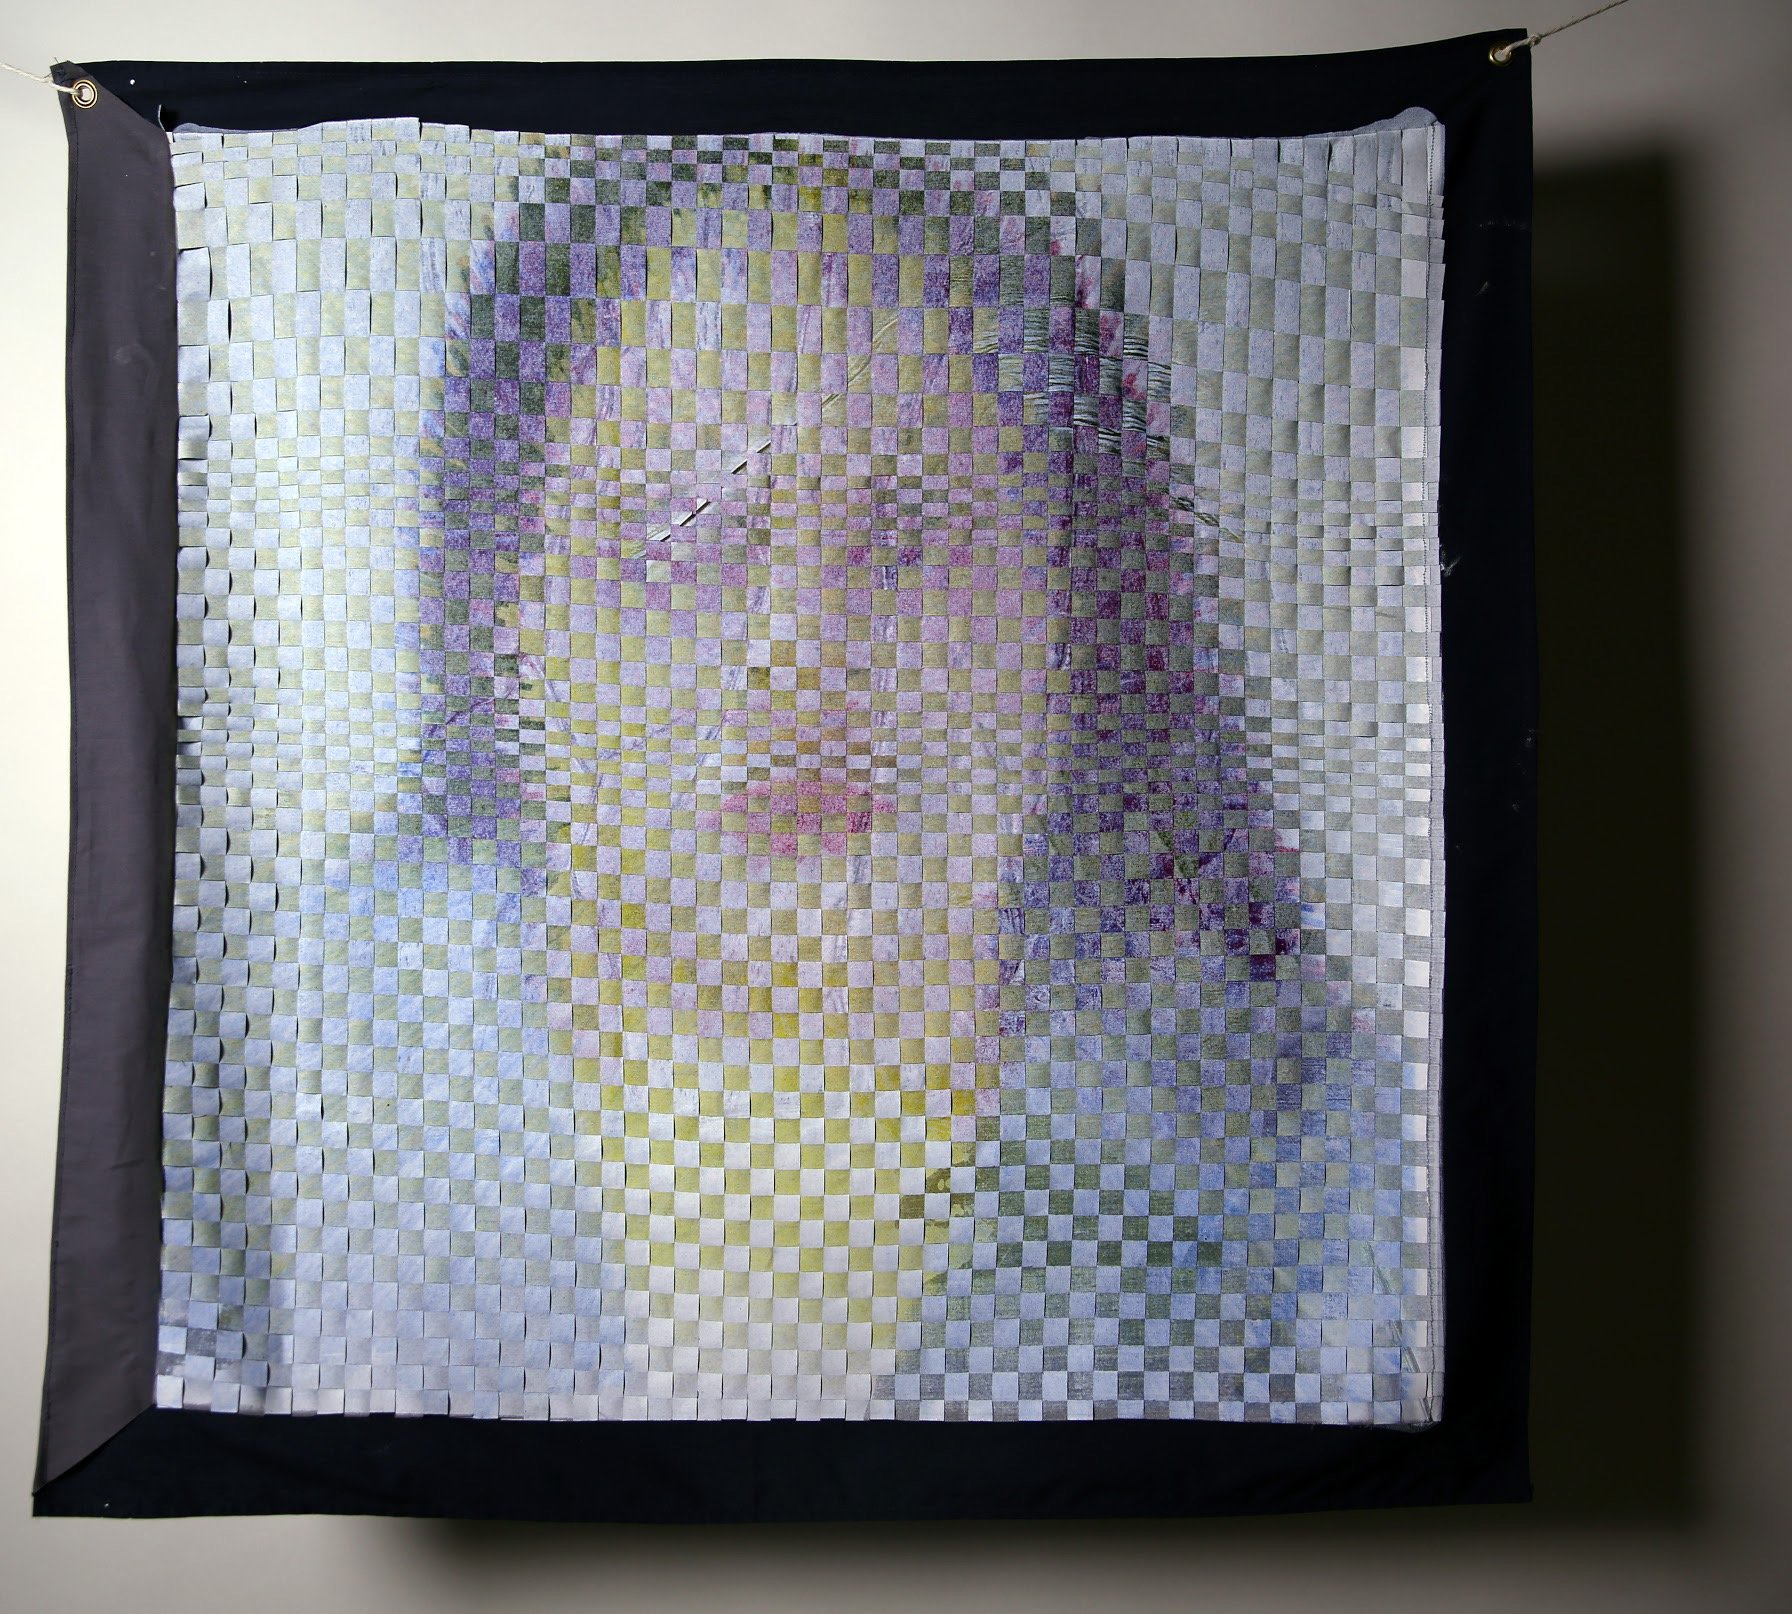    Momma's Last Passport Issue No. 1  , 2019, handwoven CMYK screenprint on poly-cotton fabric, 31.5” x 31.5”  